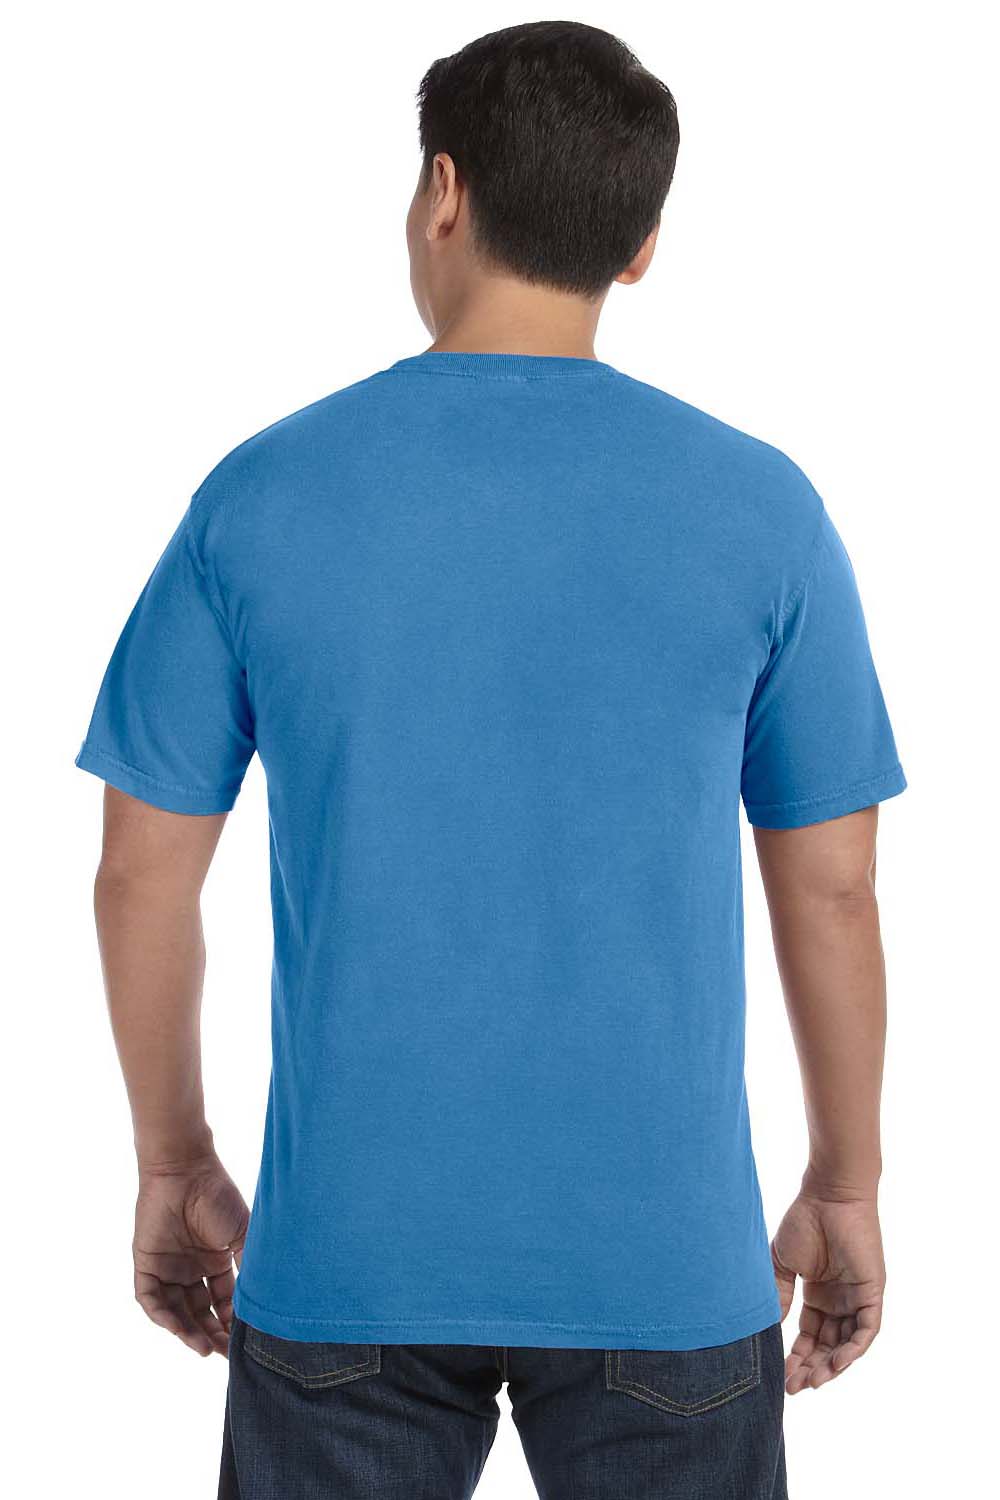 Comfort Colors C1717 Mens Short Sleeve Crewneck T-Shirt Royal Blue Caribe Back